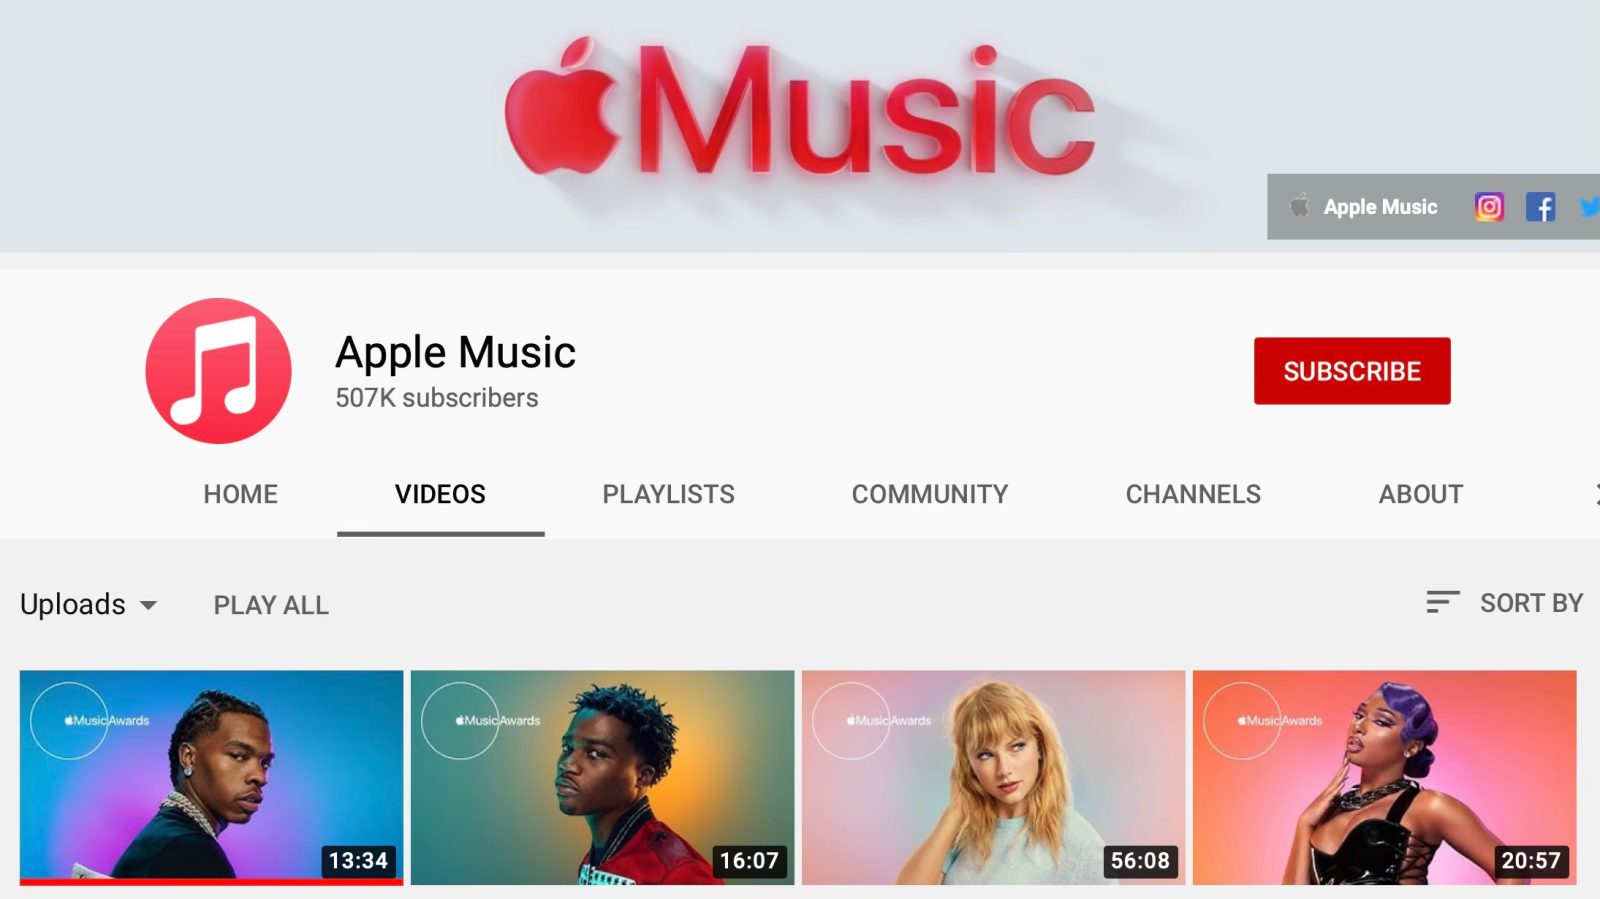 Apple Music award winners videos